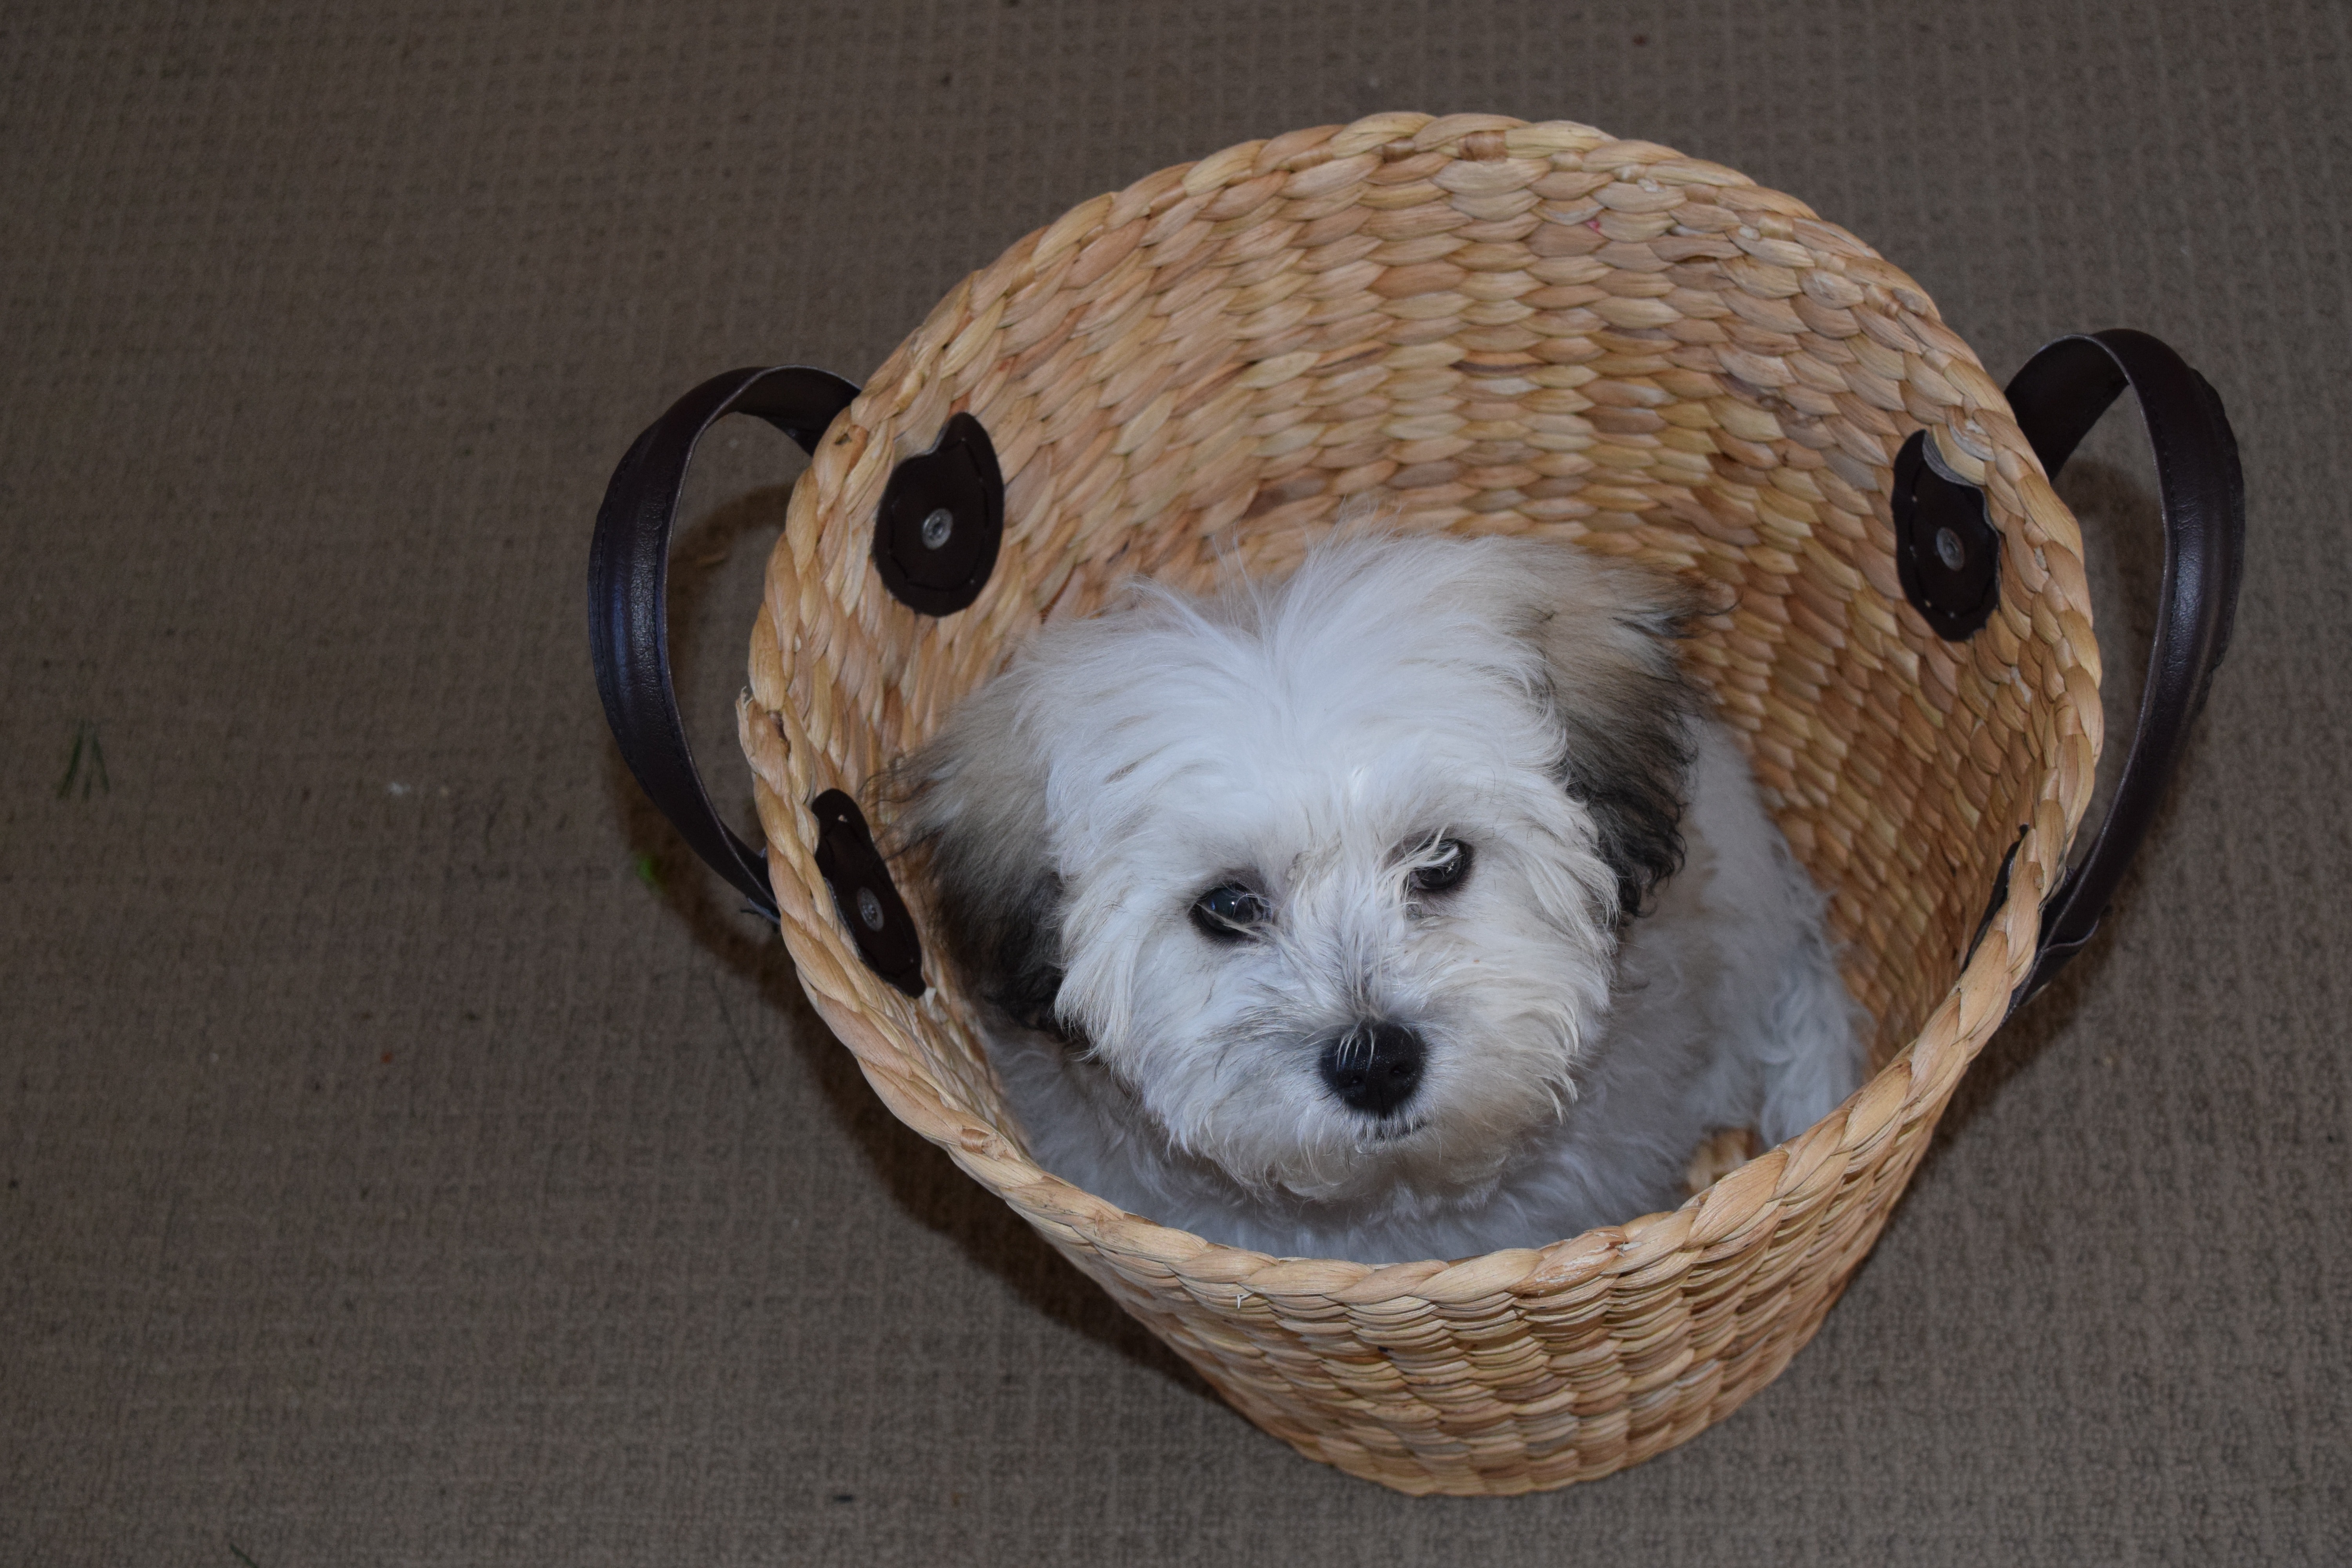 white and black long fut puppy in brown wicker round basket